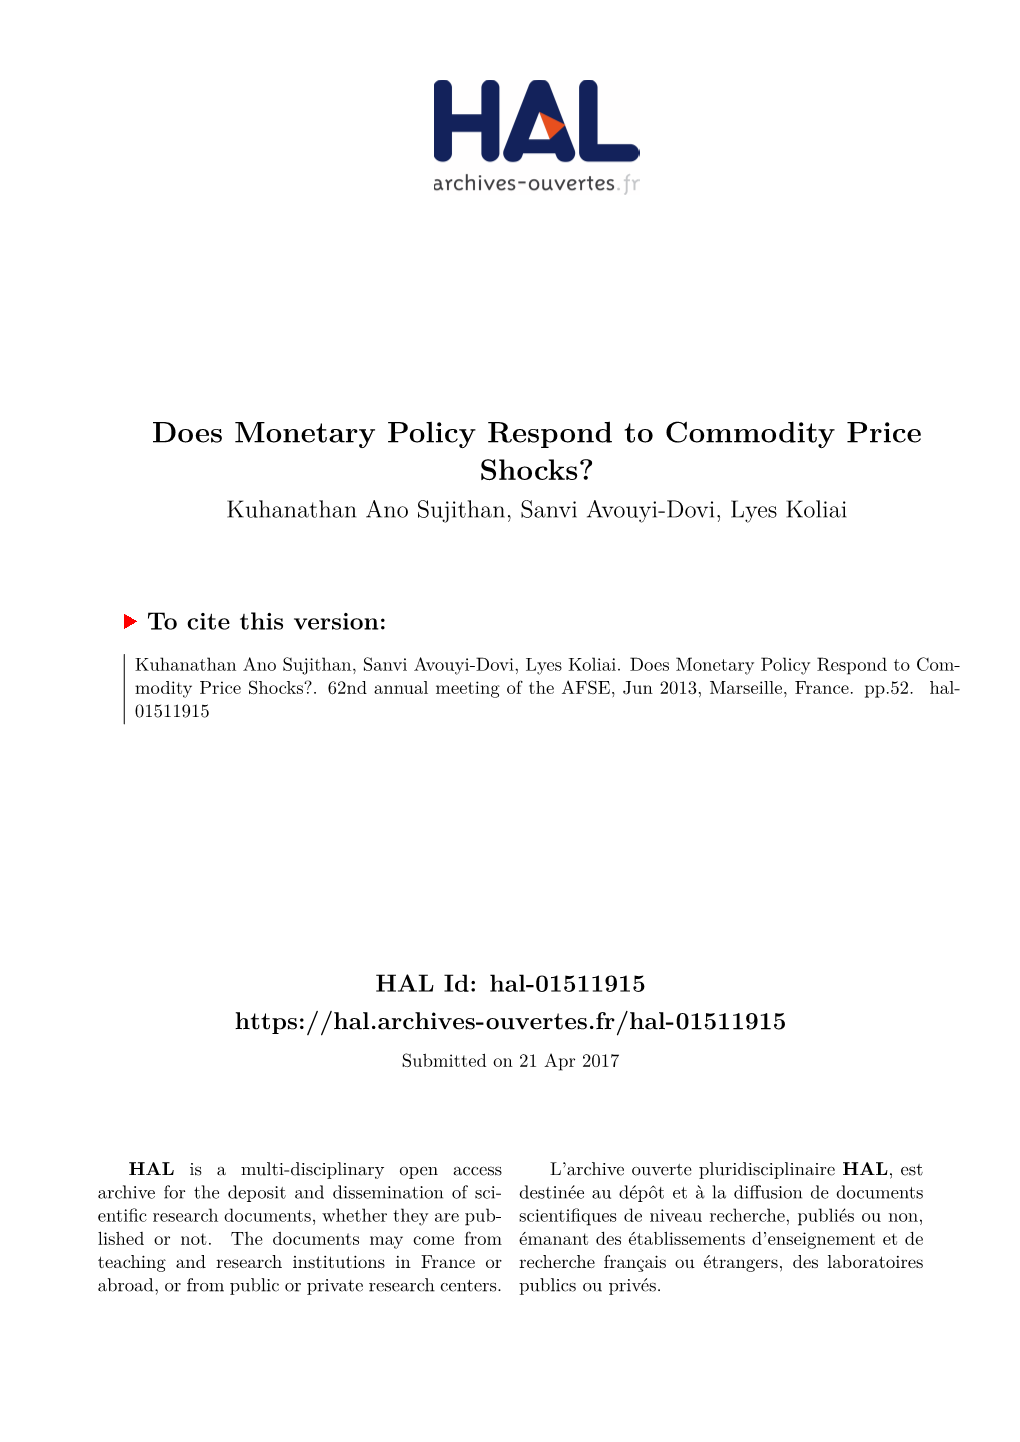 Does Monetary Policy Respond to Commodity Price Shocks? Kuhanathan Ano Sujithan, Sanvi Avouyi-Dovi, Lyes Koliai